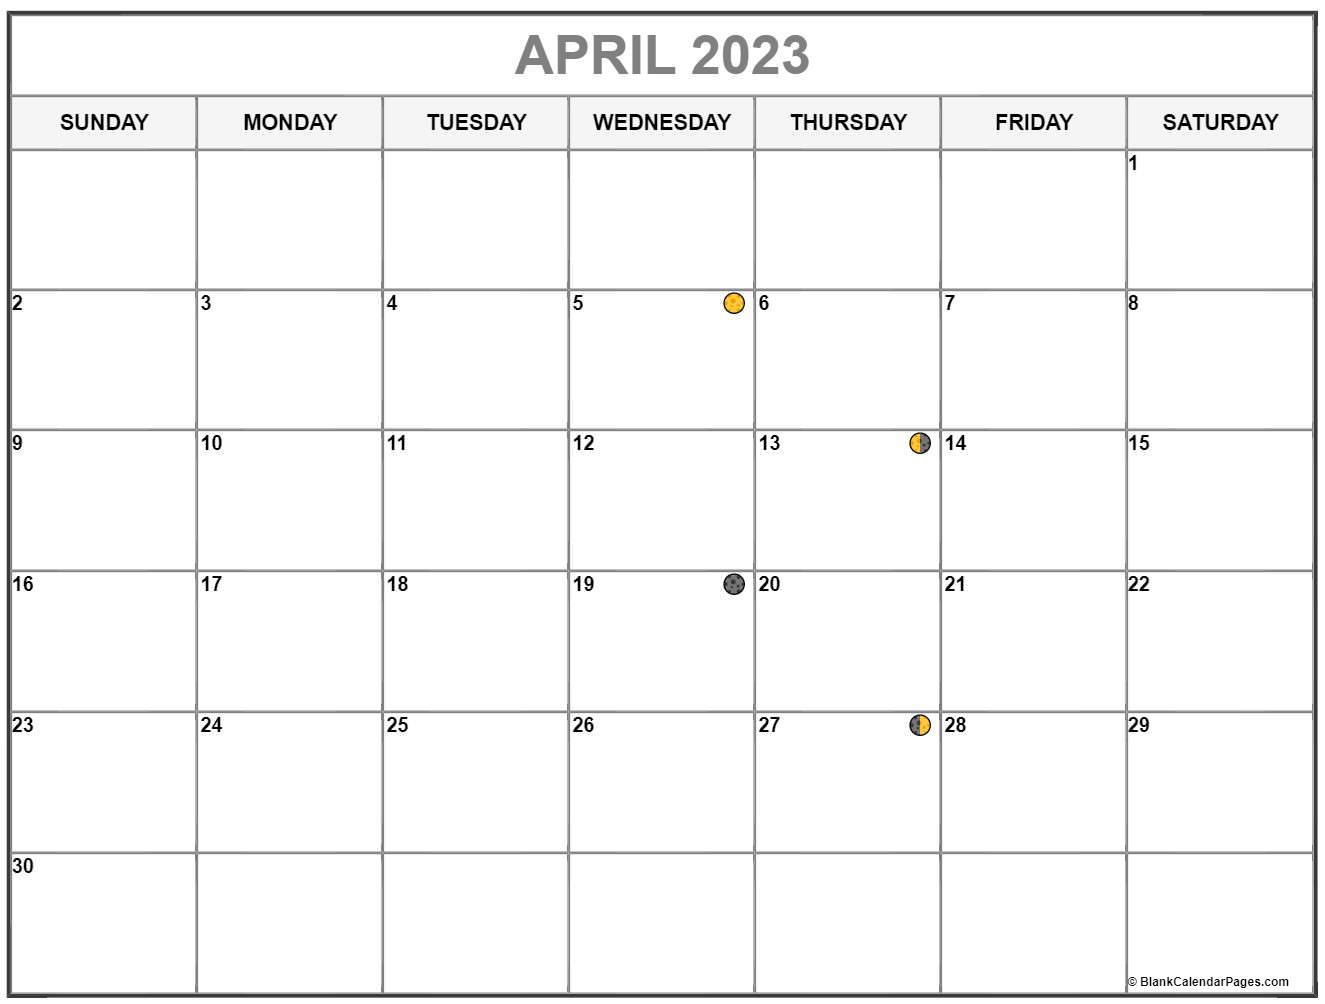 April 2023 Lunar Calendar Moon Phase Calendar